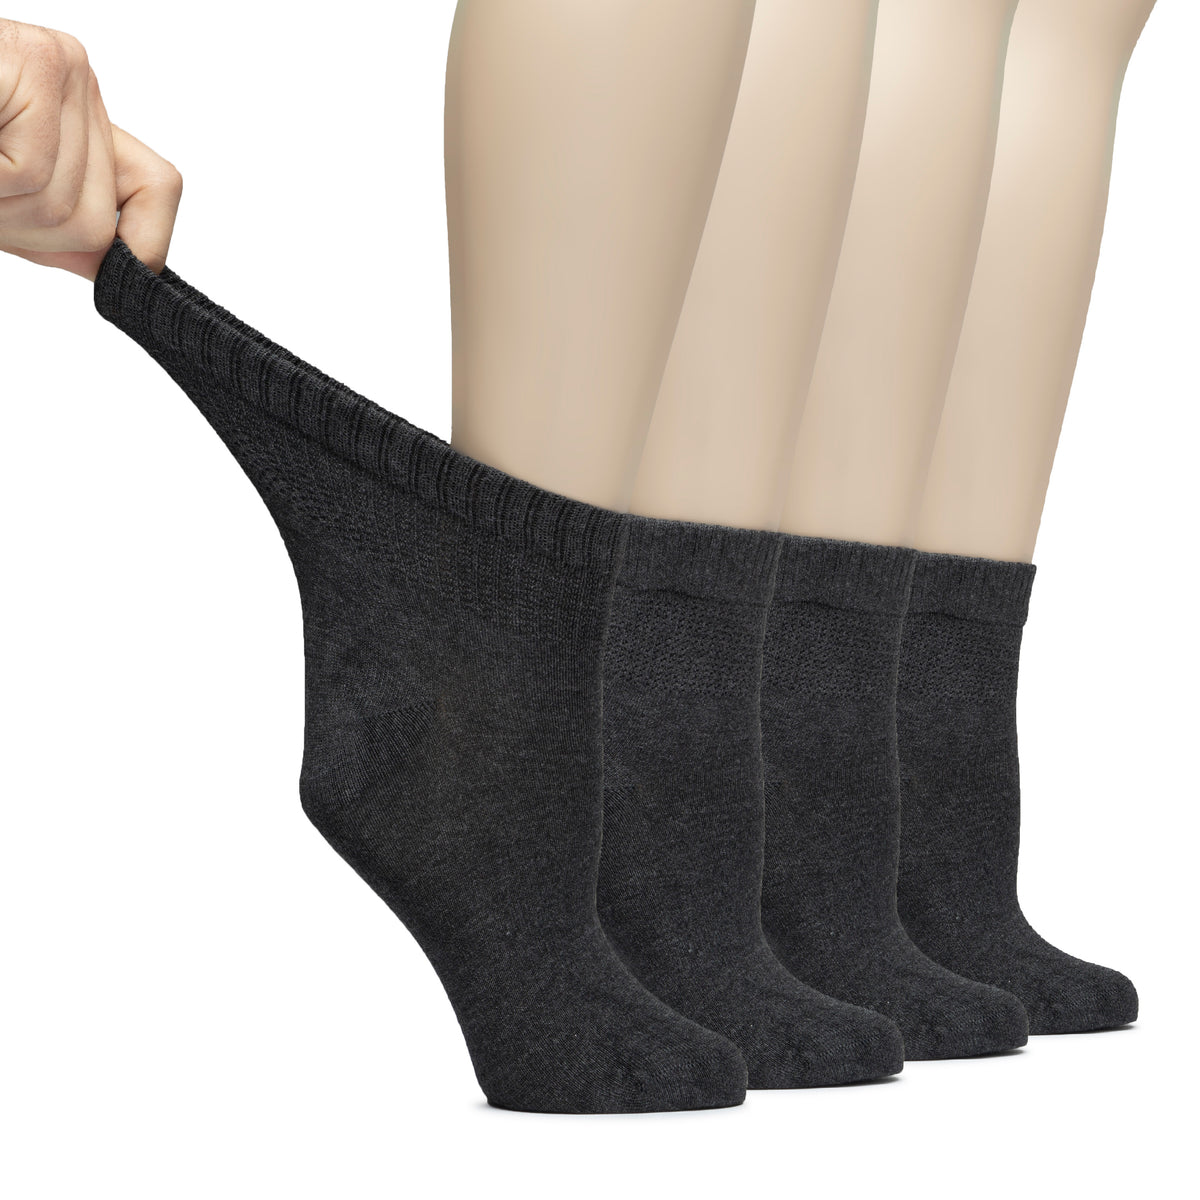 Hugh Ugoli Lightweight Women's Diabetic Ankle Socks Bamboo Thin Socks Seamless Toe and Non-Binding Top, 4 Pairs, , Shoe Size: 6-9/10-12 | Shoe Size: 6-9 | Christmas Green